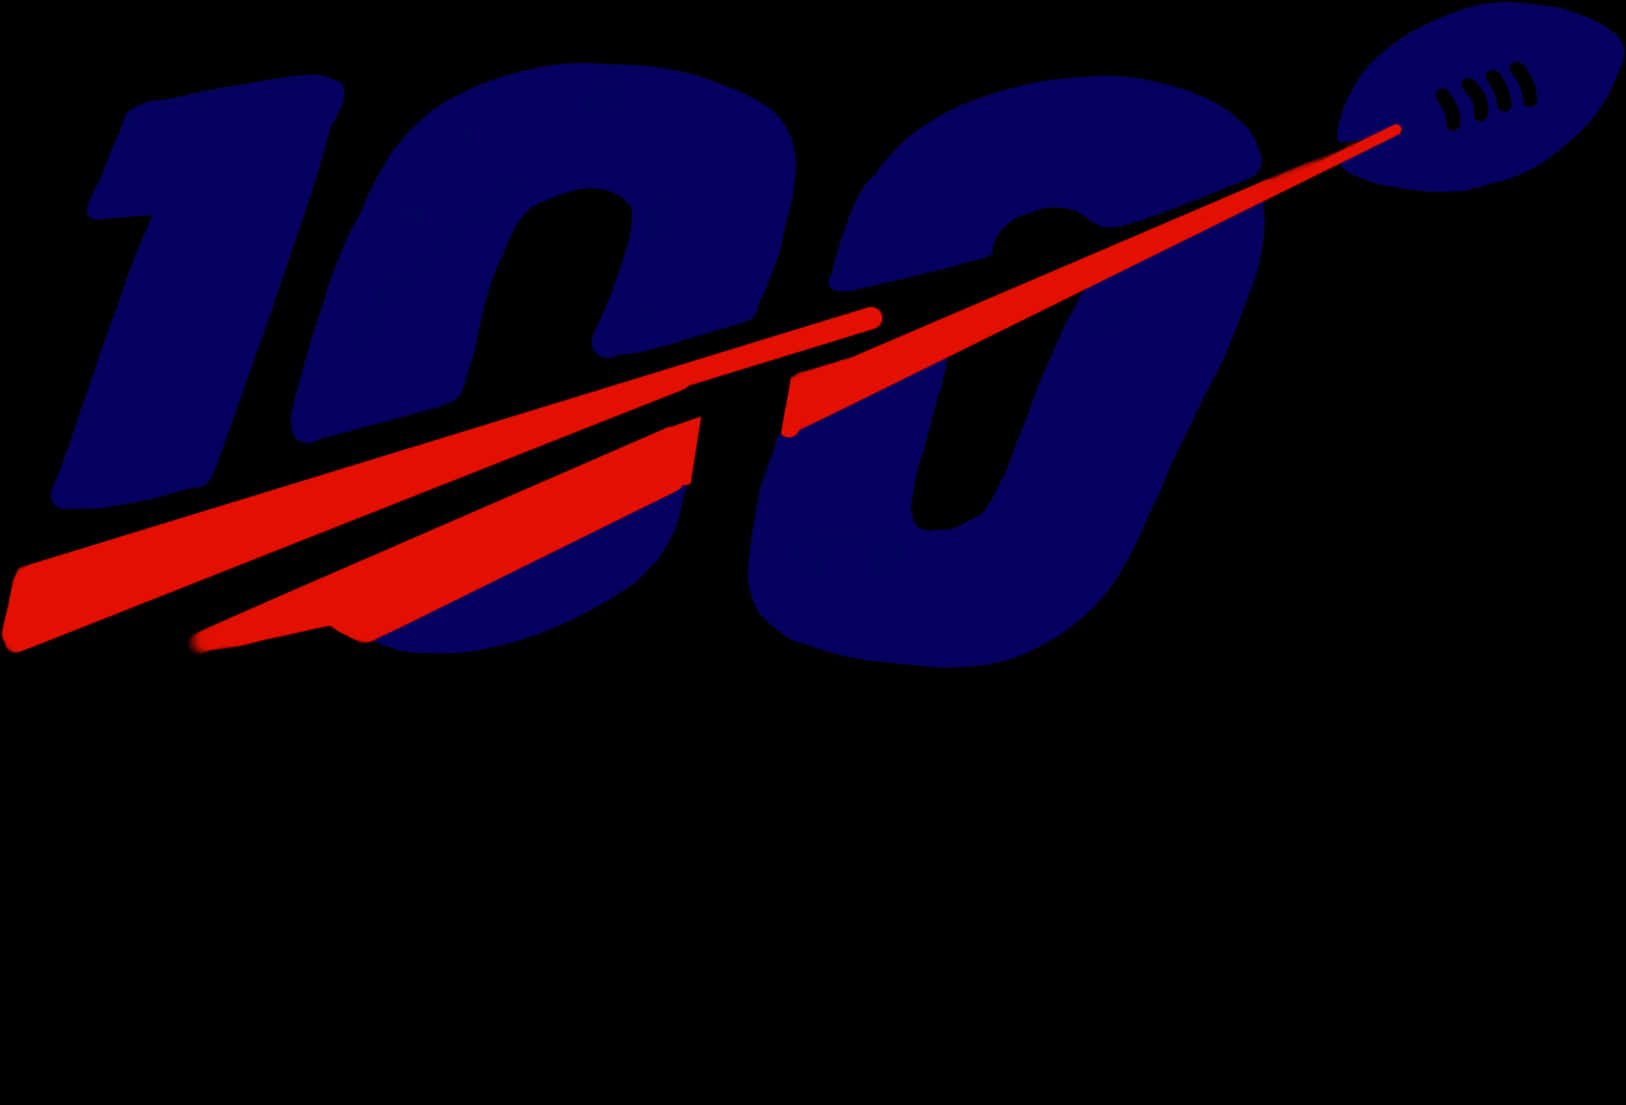 N F L100th Anniversary Logo PNG image